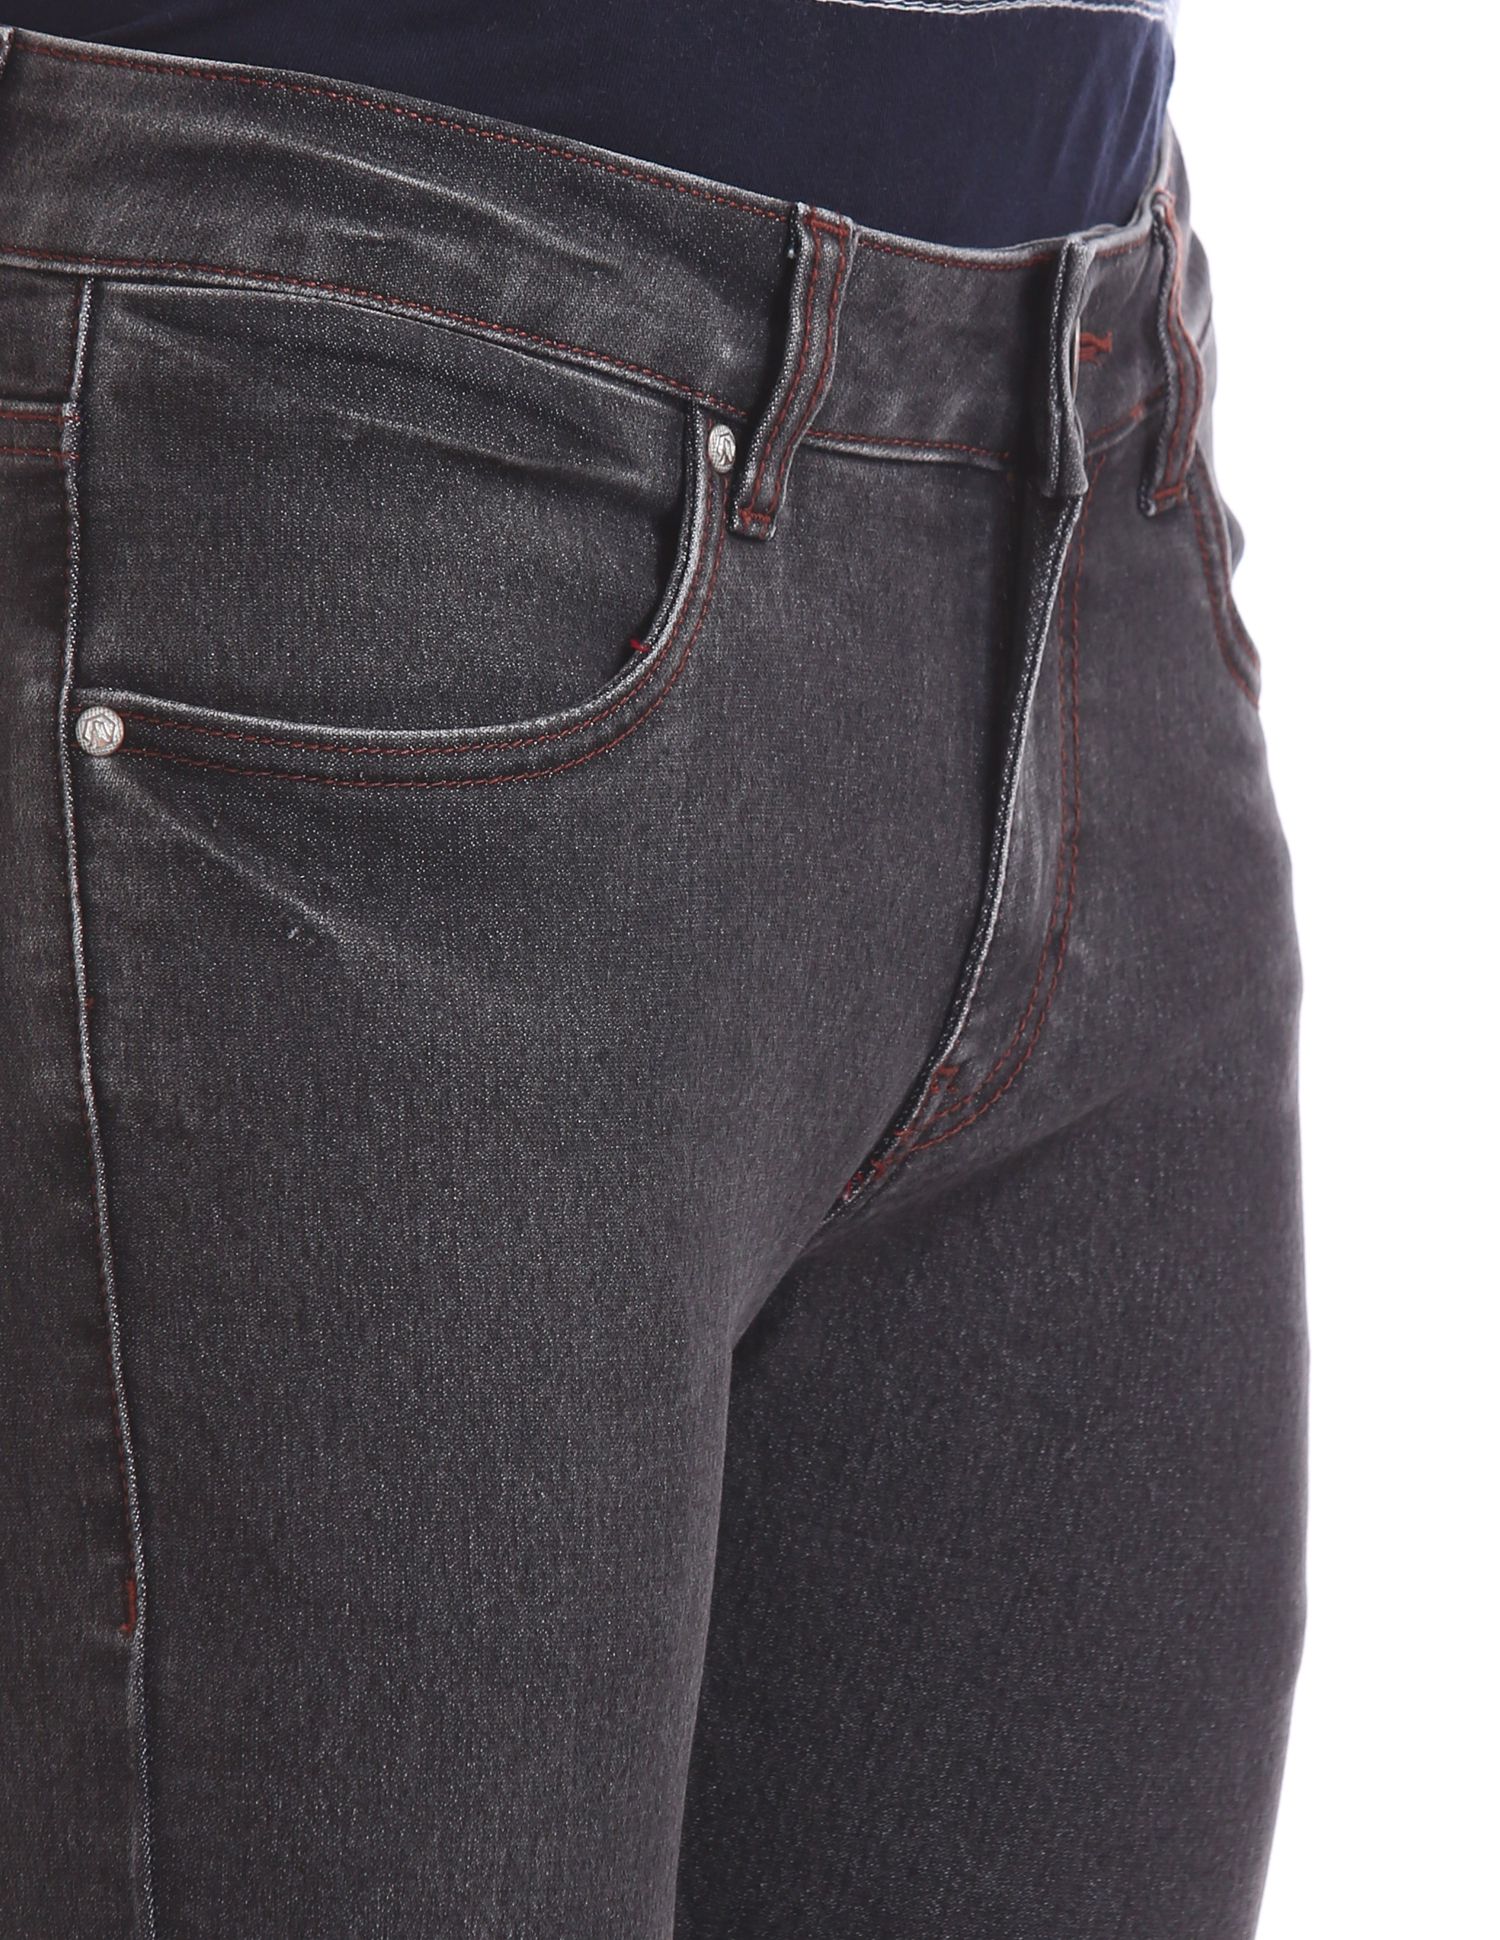 Ruf And Tuf Black Slim Jeans - Buy Ruf And Tuf Black Slim Jeans Online ...